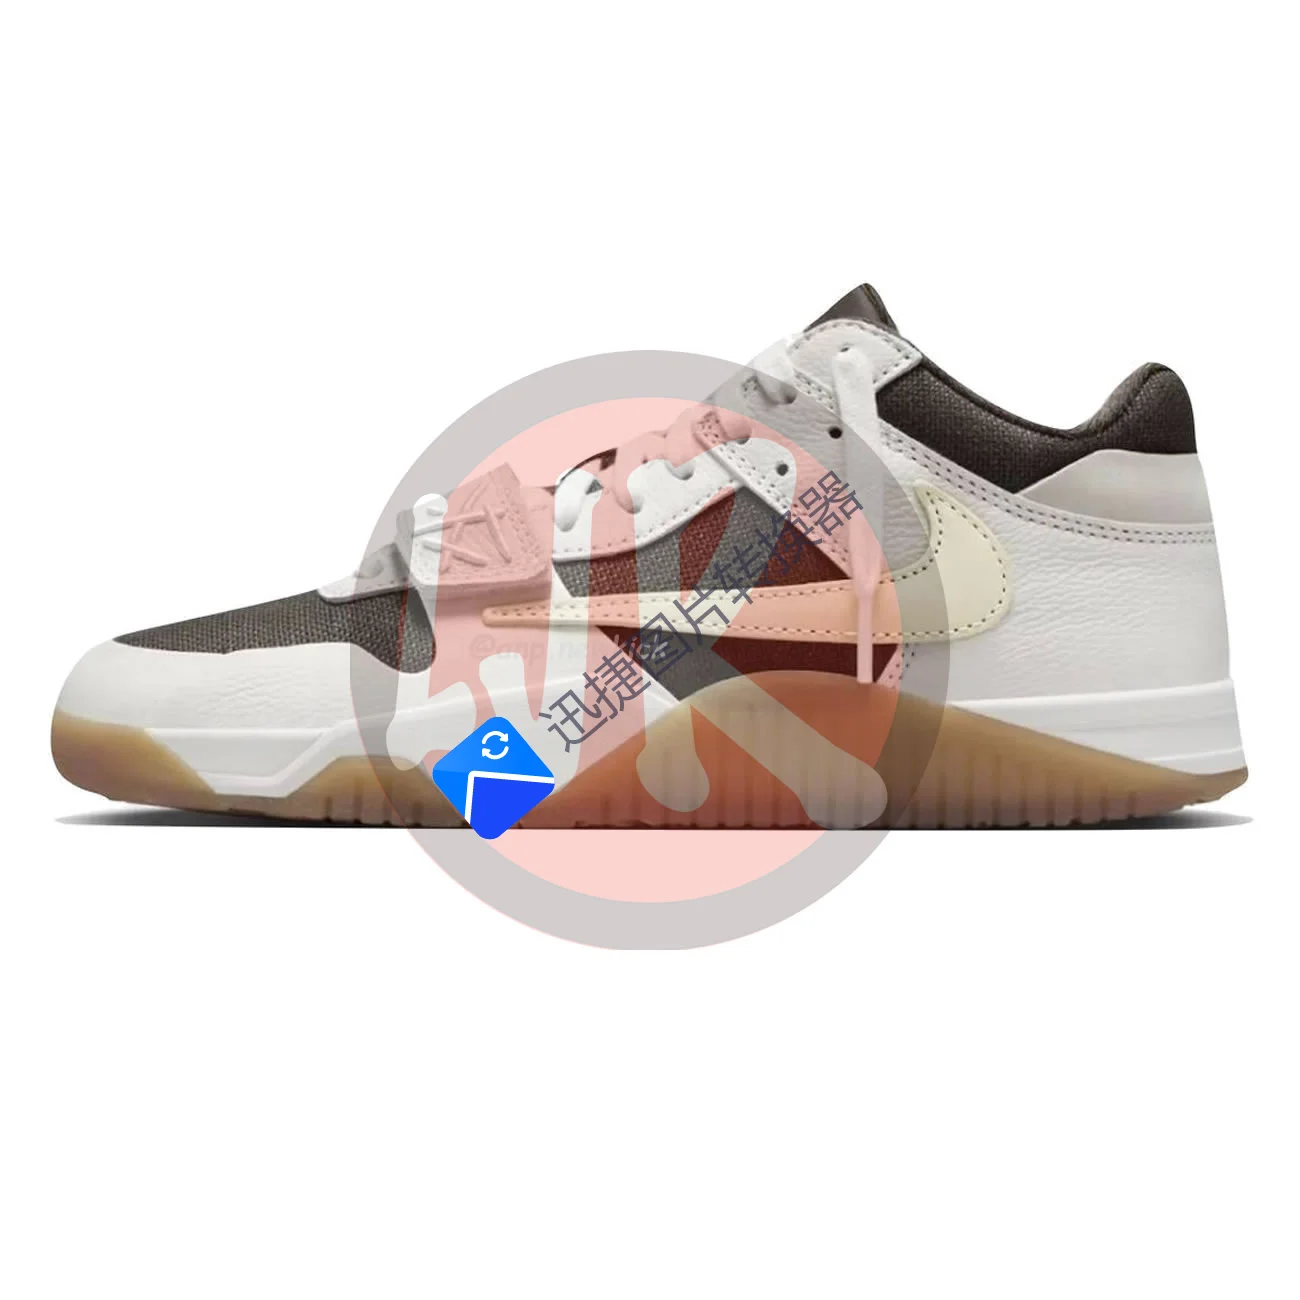 Travis Scott X Jordan Cut The Check Trainer Release Date Ljr Sneakers (20) - bc-ljr.net